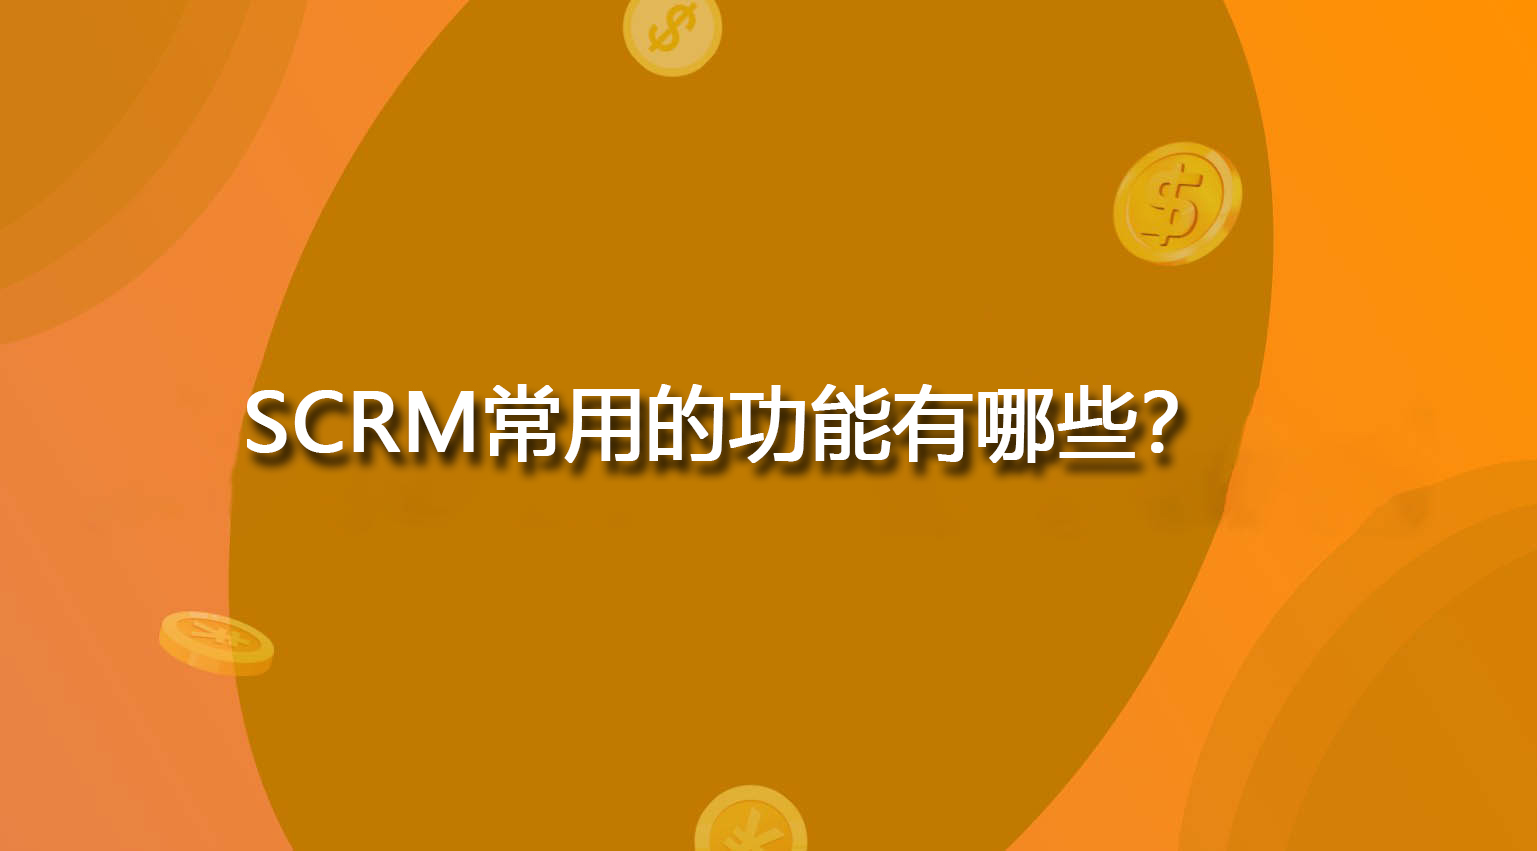 SCRM常用的功能有哪些？